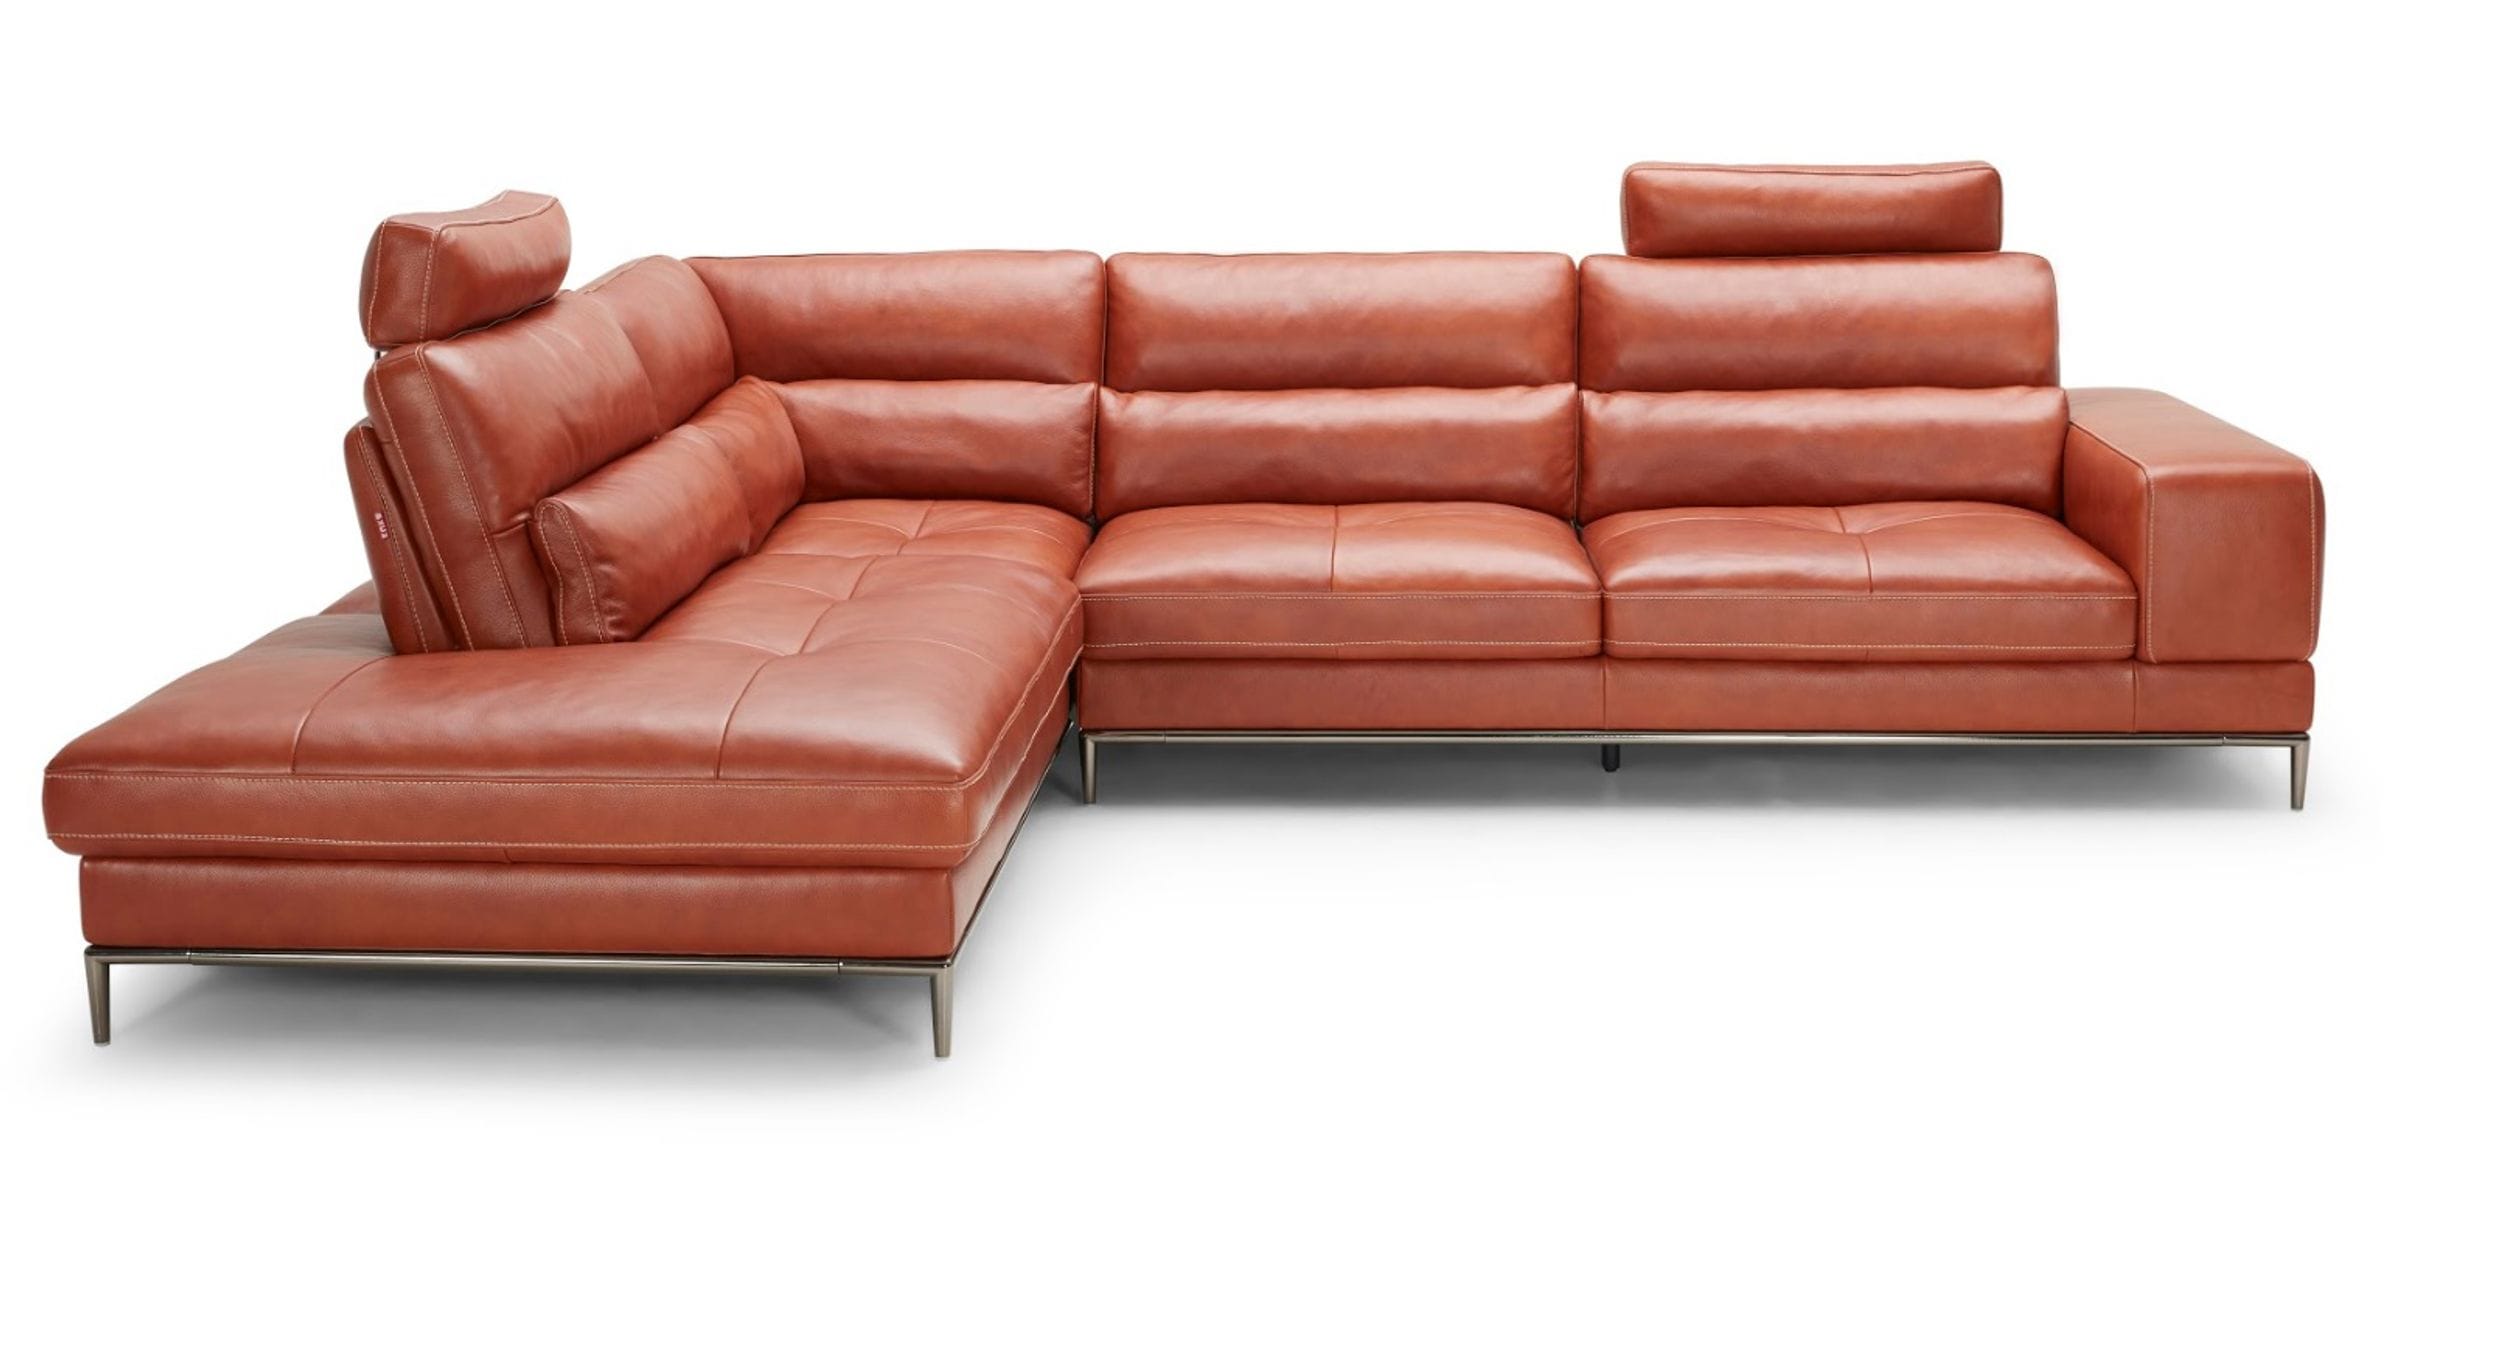 Divani Casa Kudos - Modern Cognac LAF Chaise Sectional Sofa-Sectional Sofa-VIG-Wall2Wall Furnishings